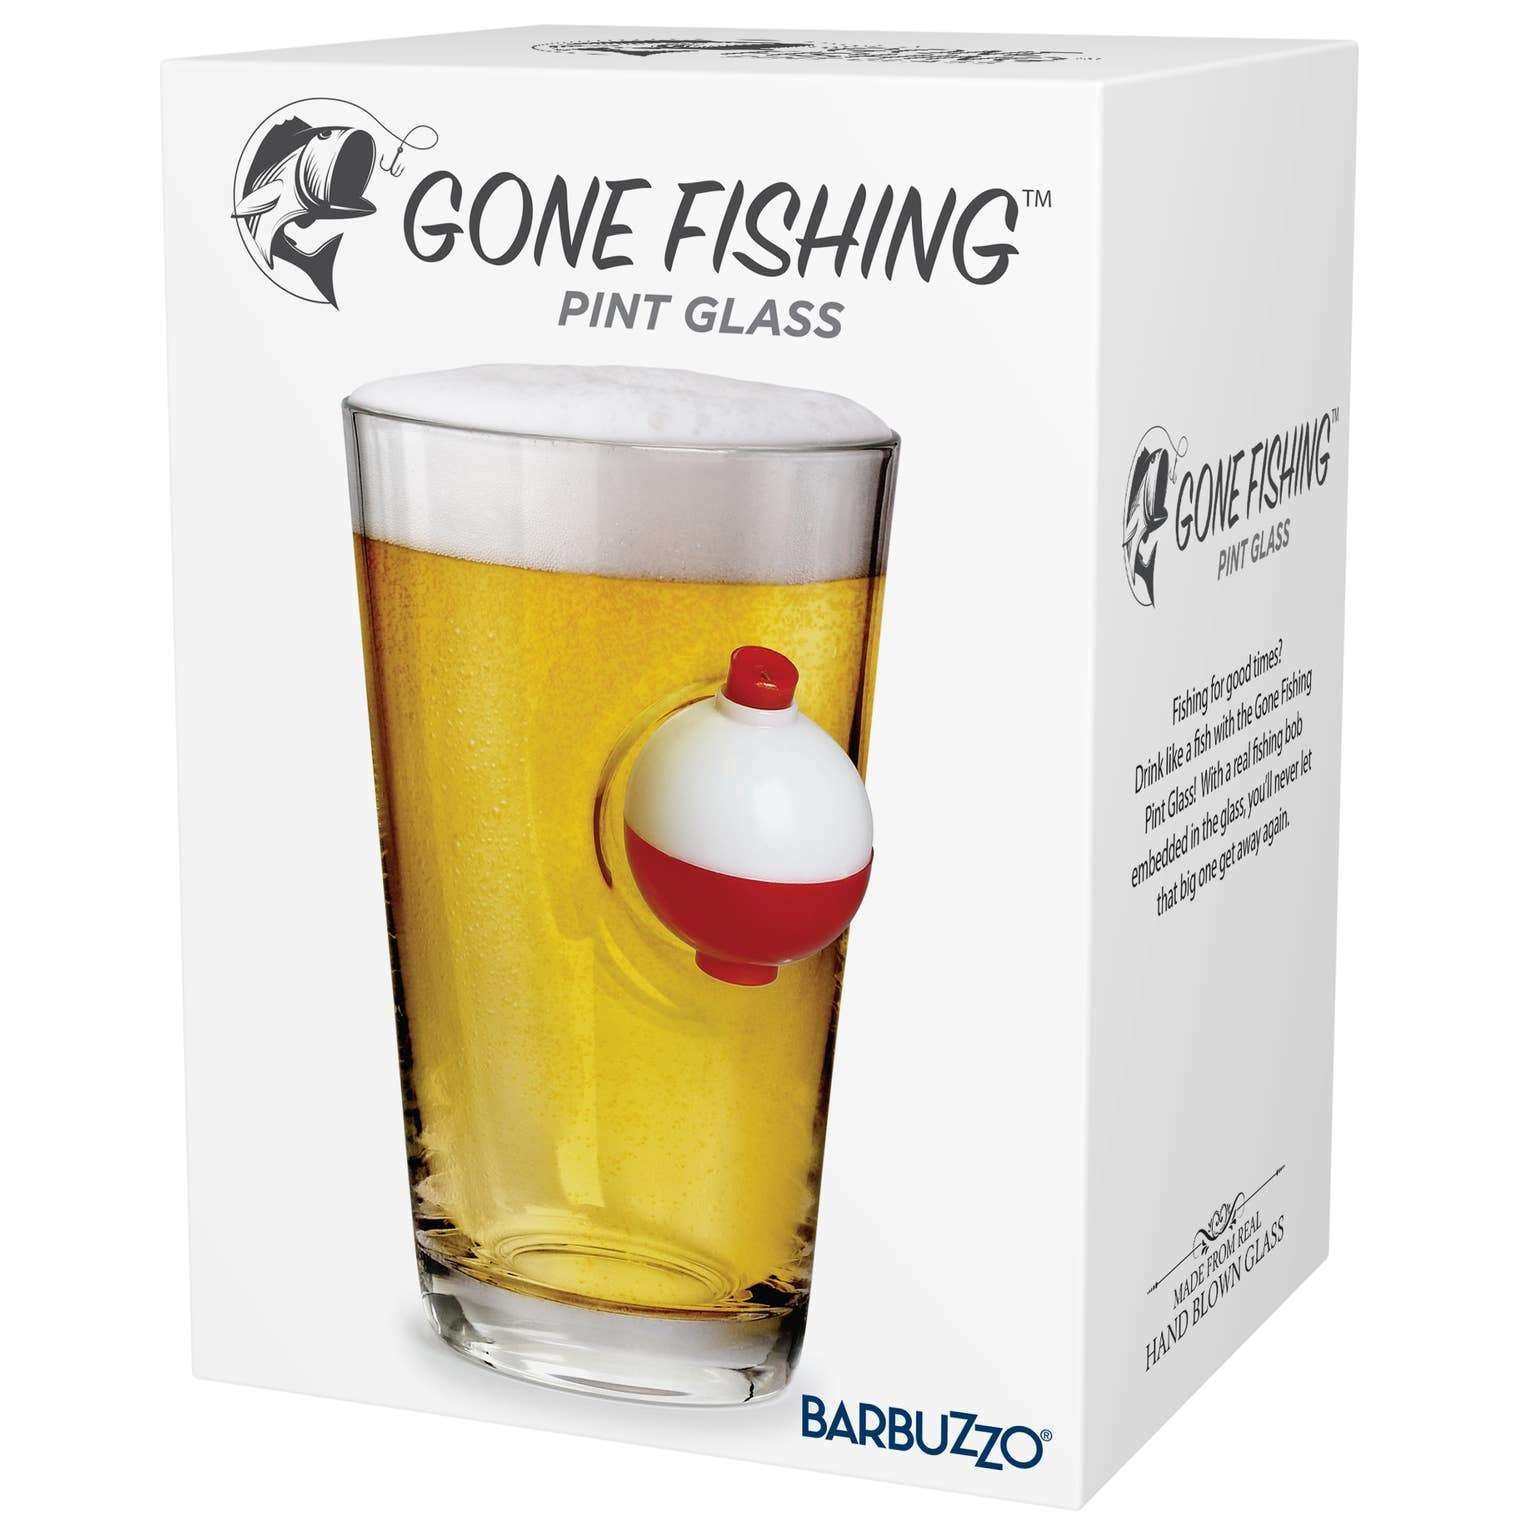 Gone Fishing Pint Glass (16 Oz Beer Glass with Fishing Bob)